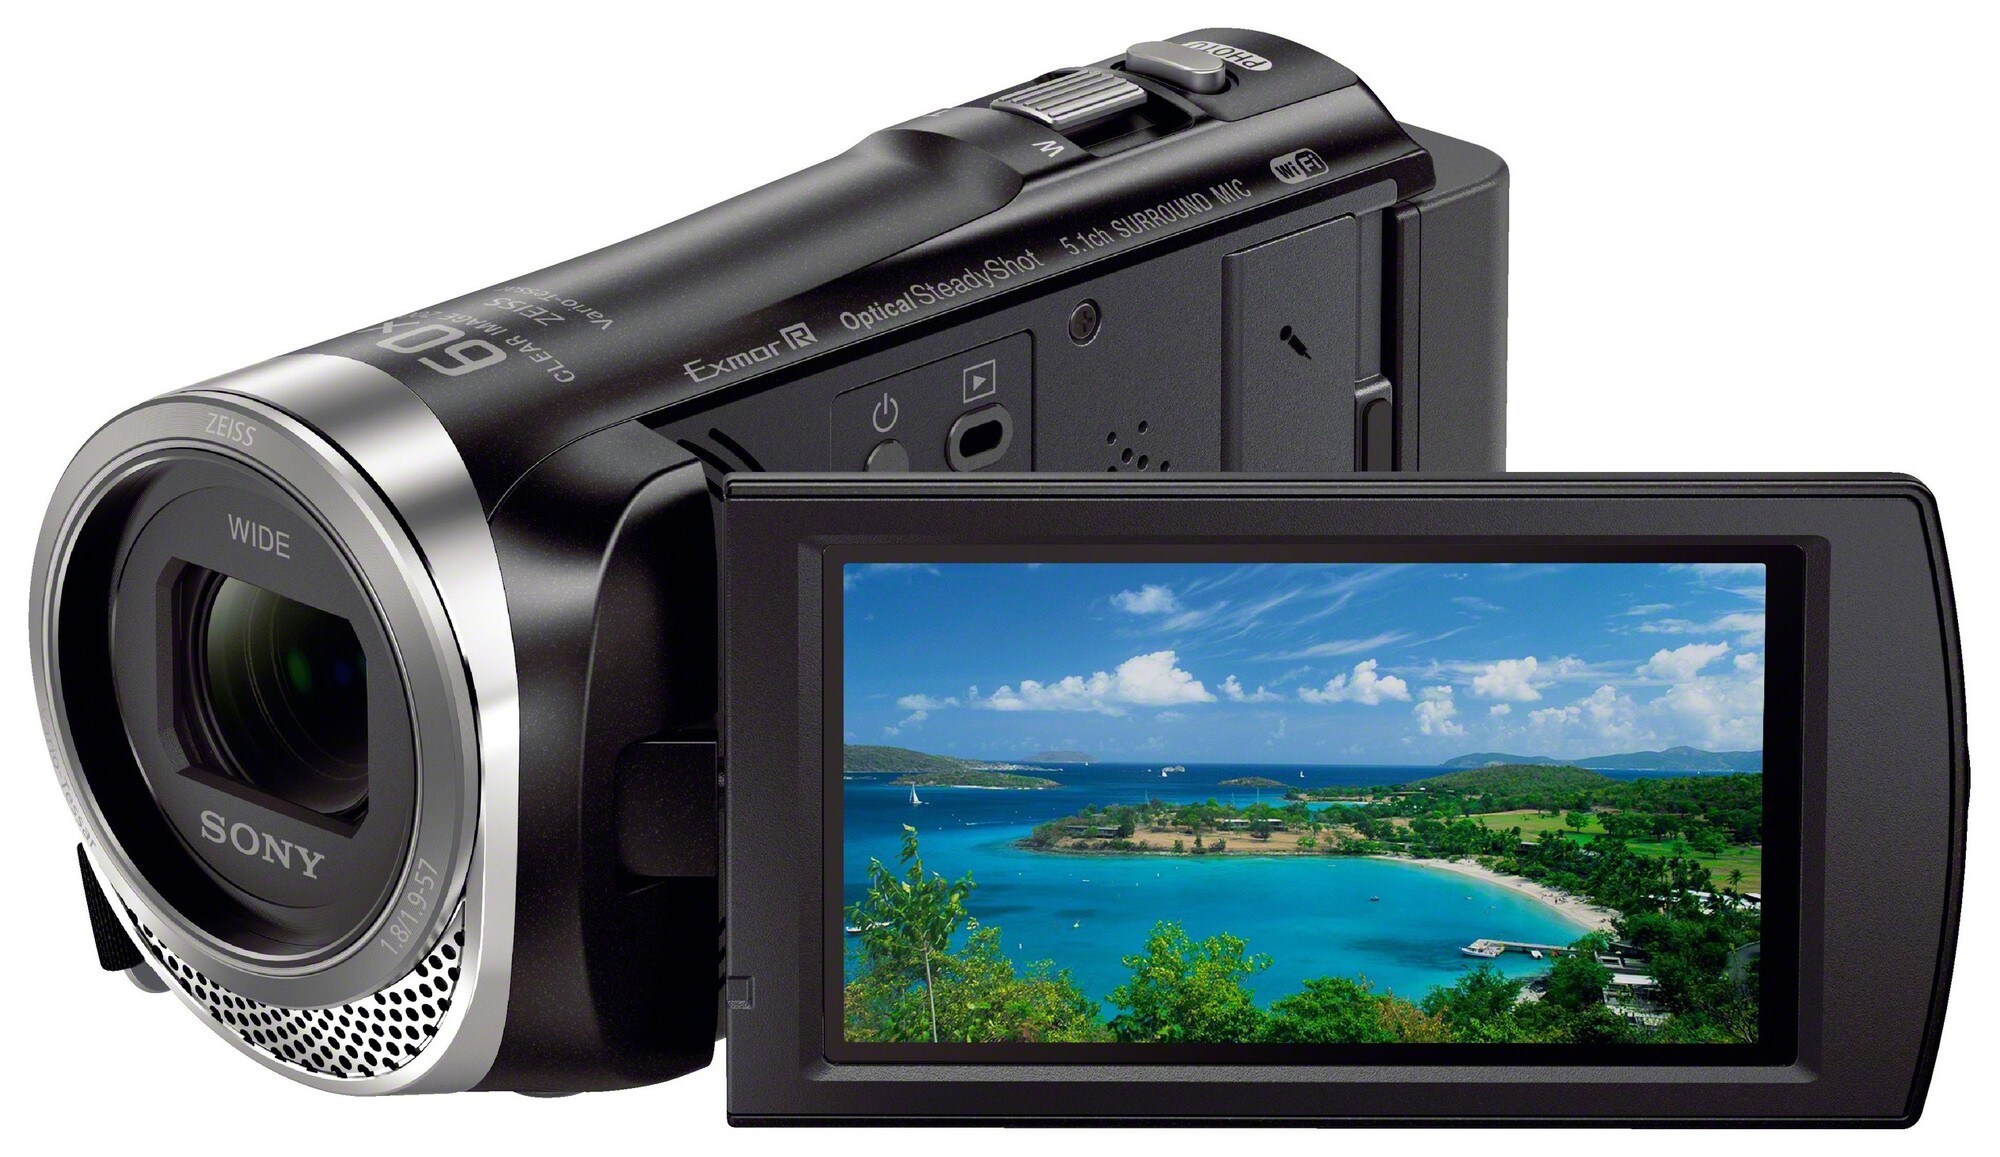 Sony HDR-CX450 videokamera - Videokamera - Elgiganten